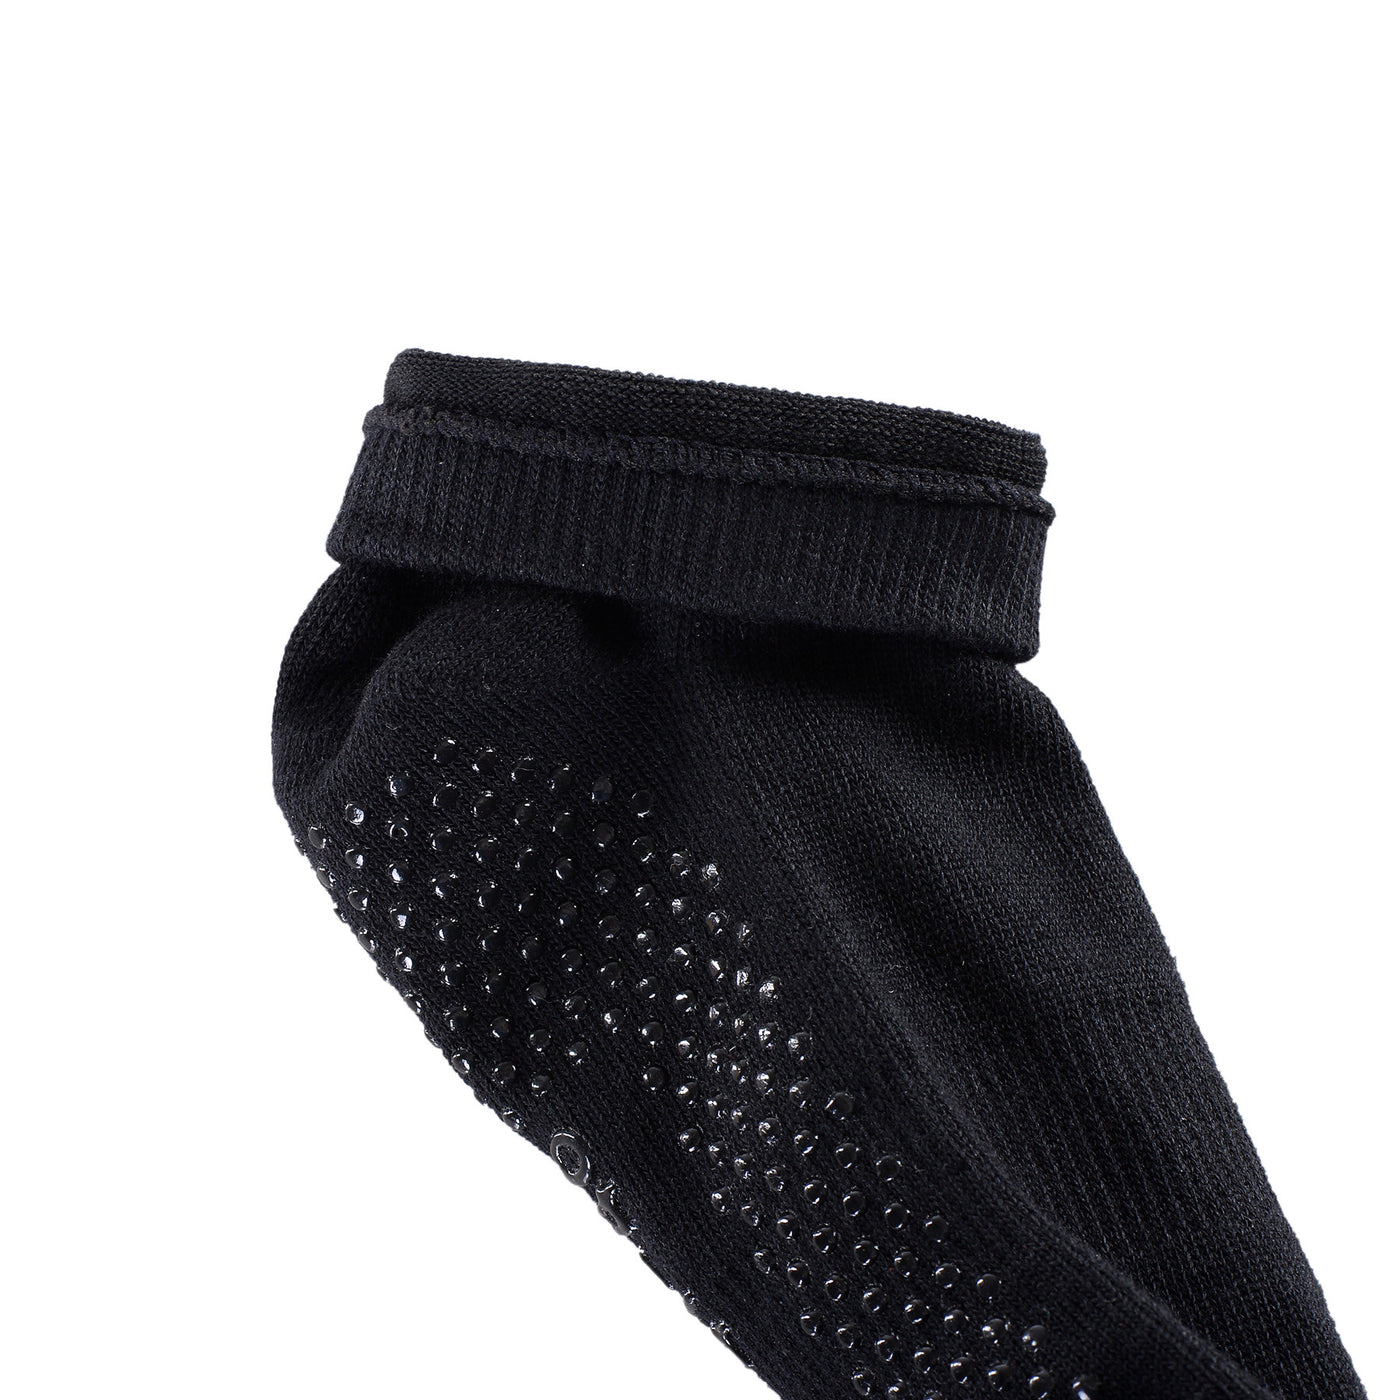 2 Pairs Men's High Quality Professional Anti Slip Half Toe Yoga Socks - Black